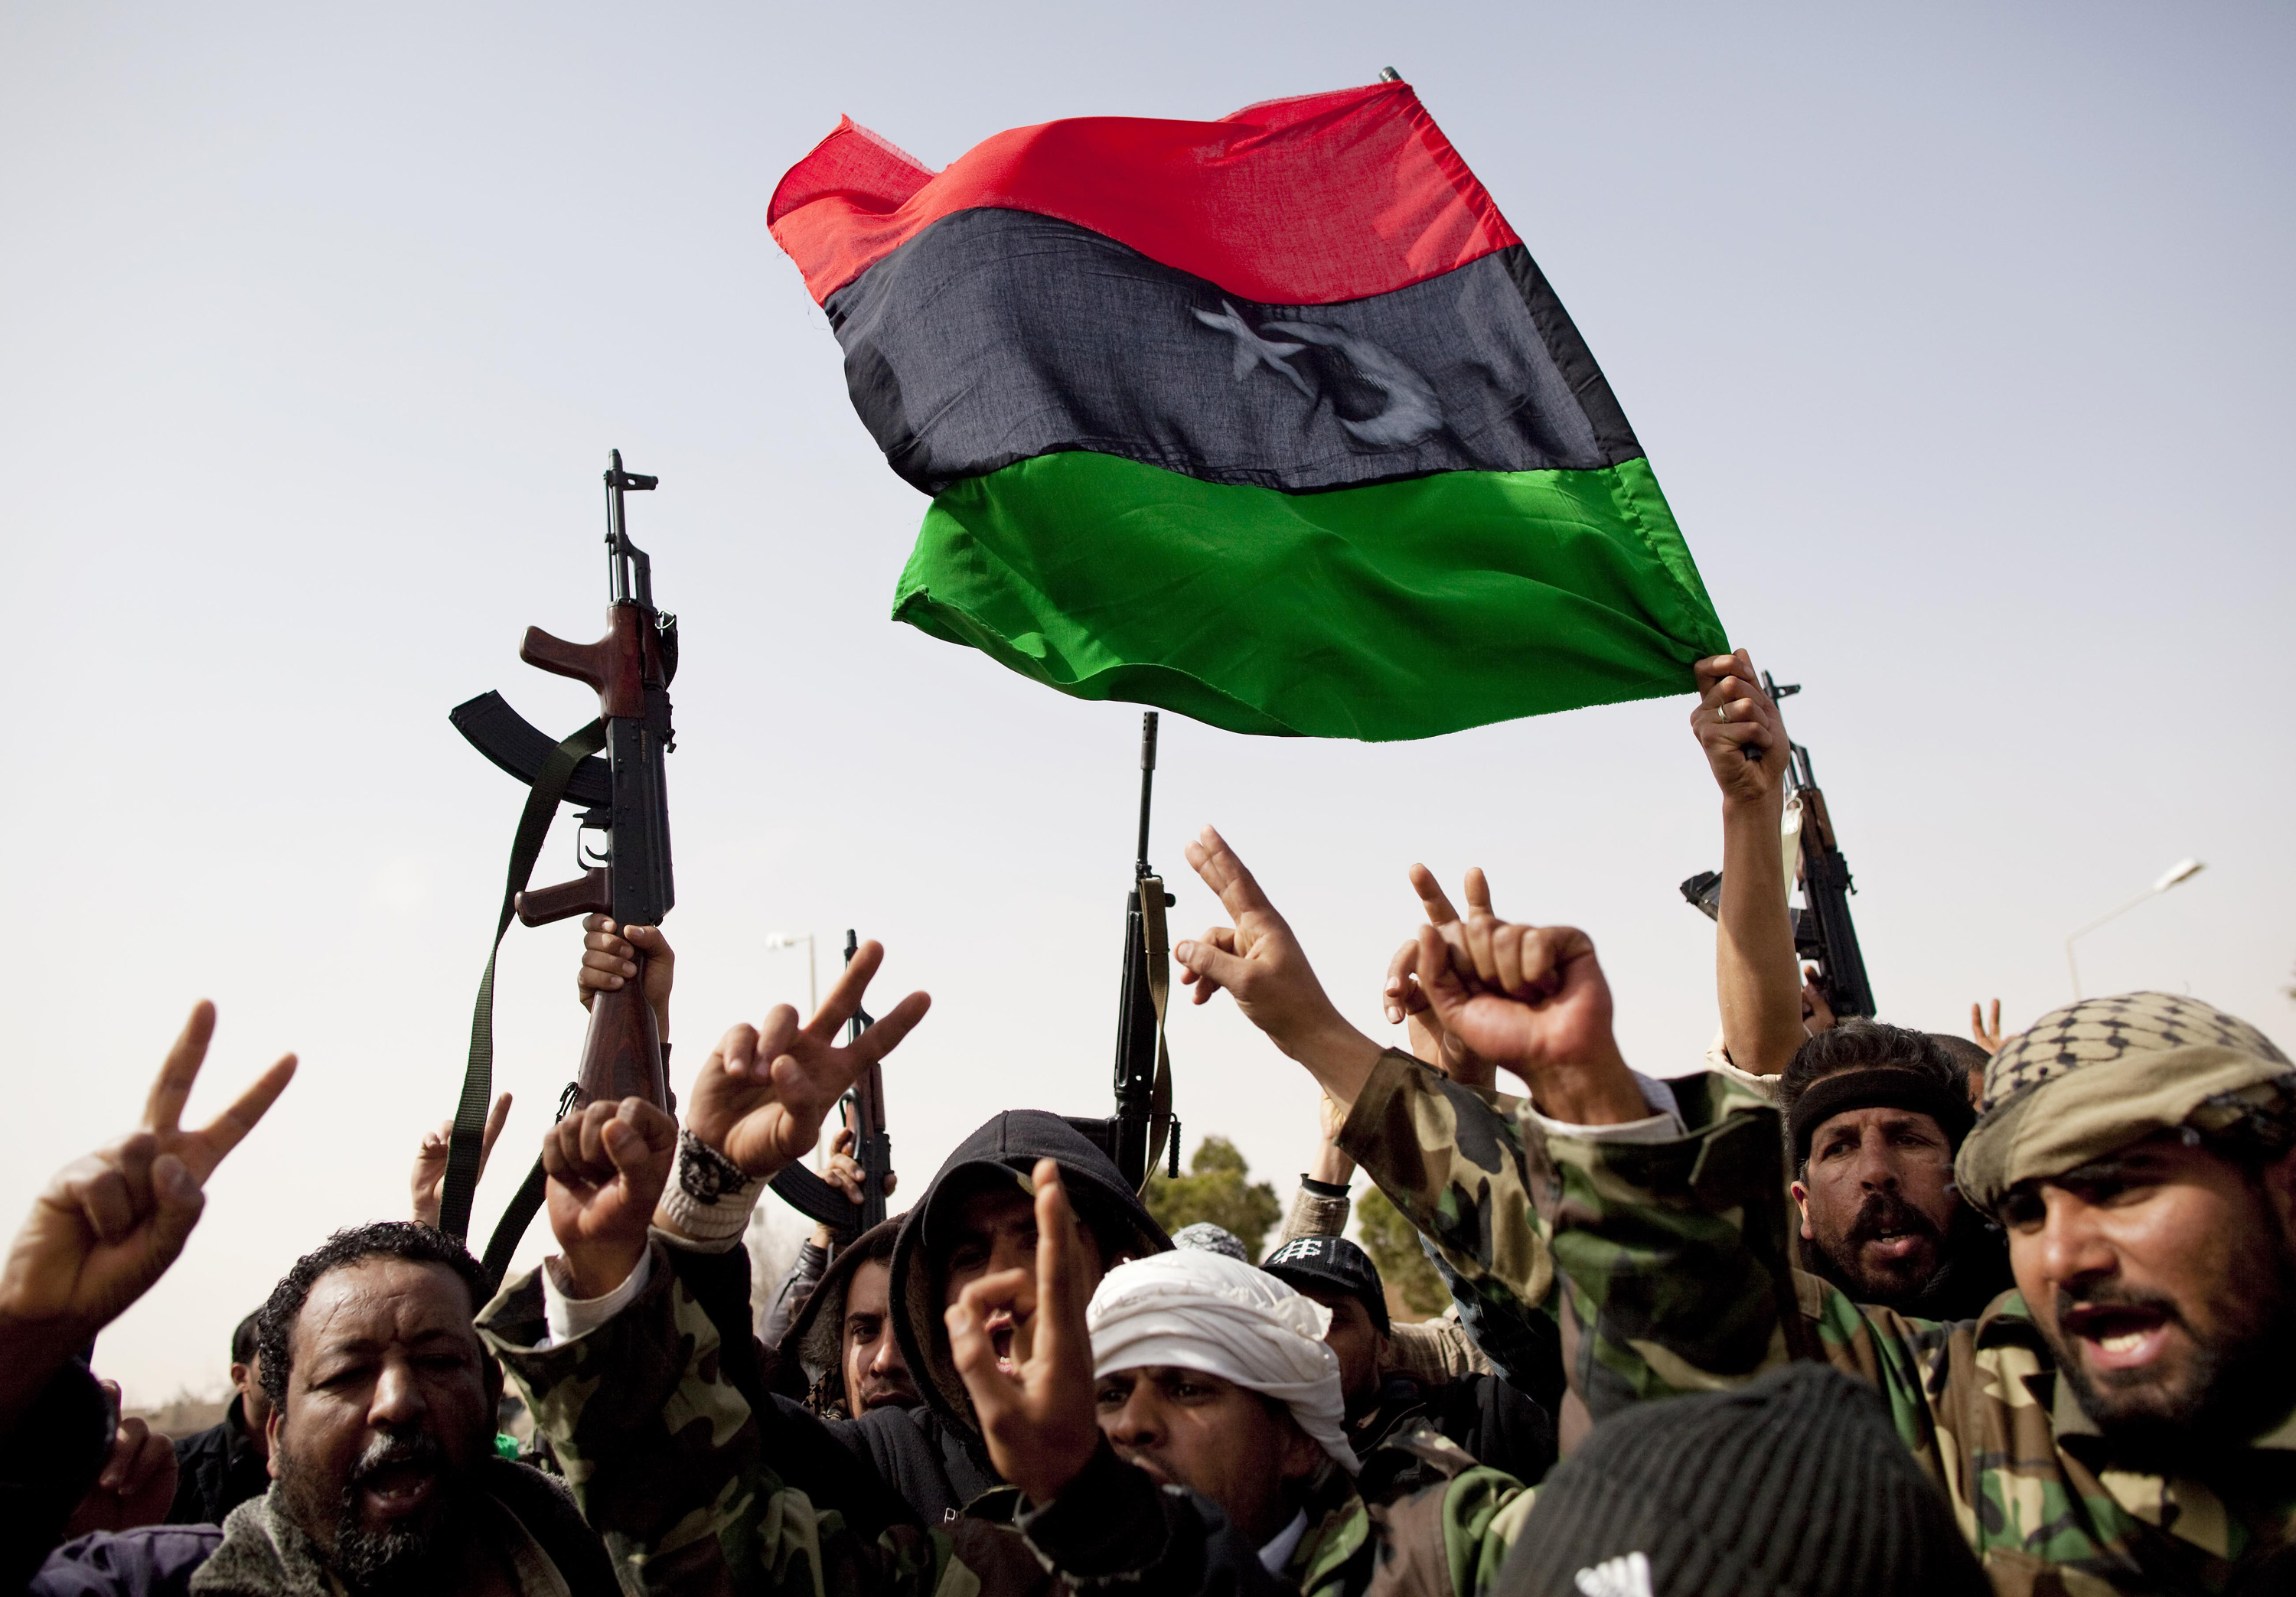 Blodbad, Uppror, Armé, Militar, Strider, Libyen, Krig, Demonstration, Kaos